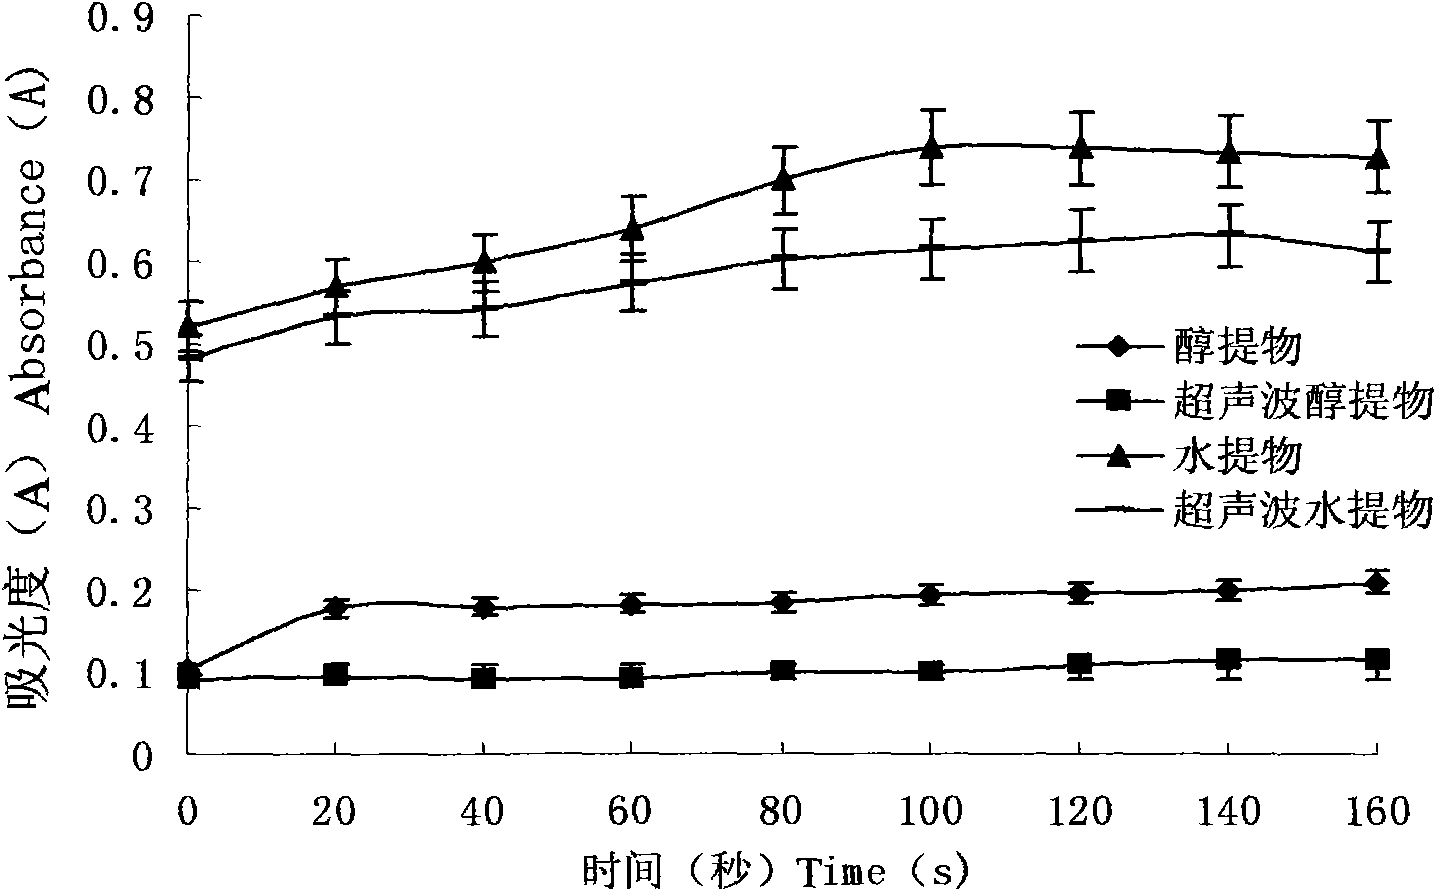 Application of samphire extract in inhibiting tyrosinase activity